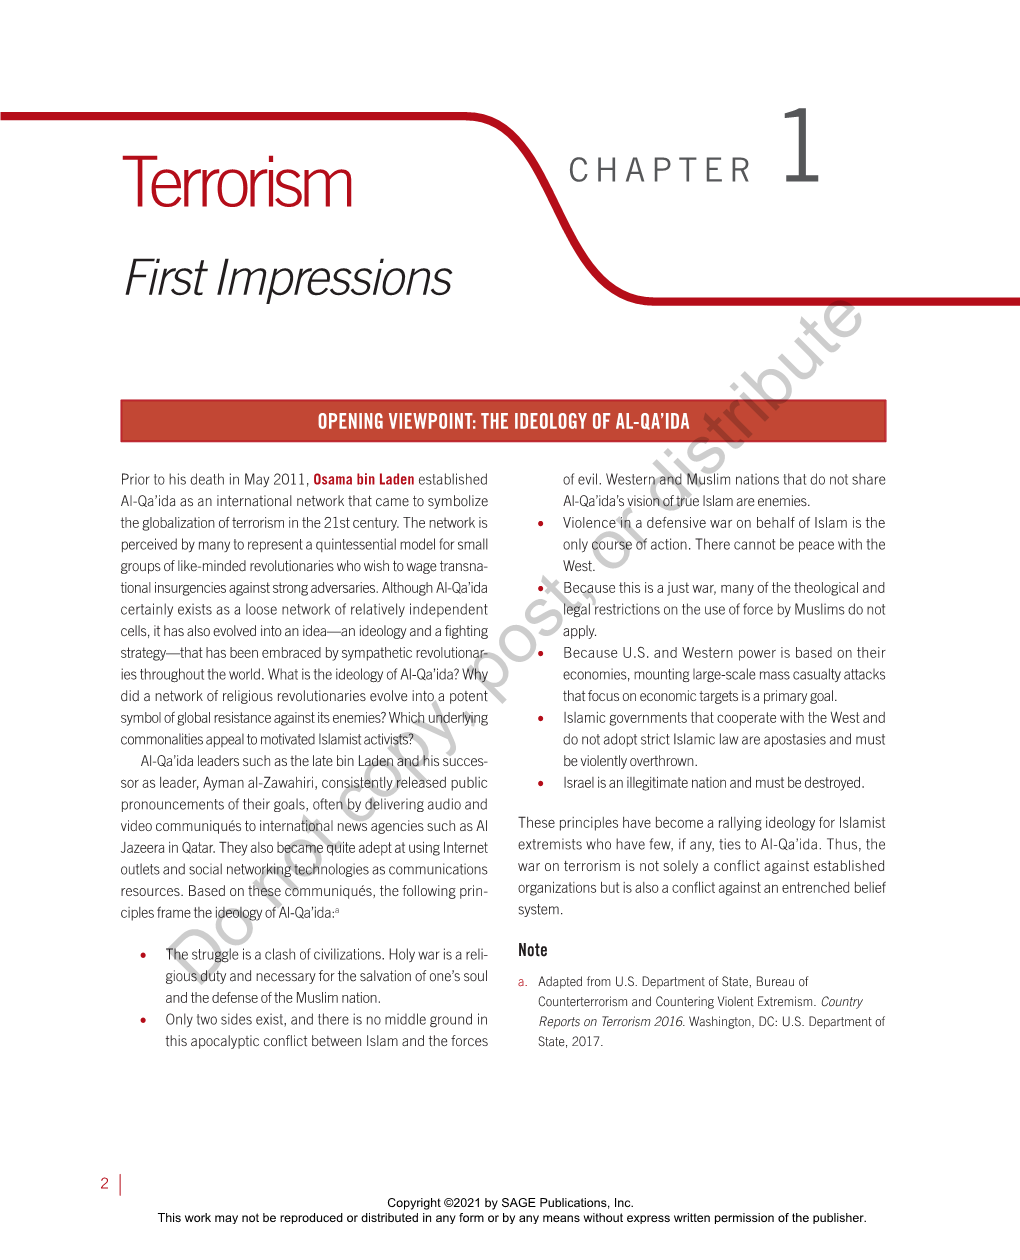 Terrorism: First Impressions 3